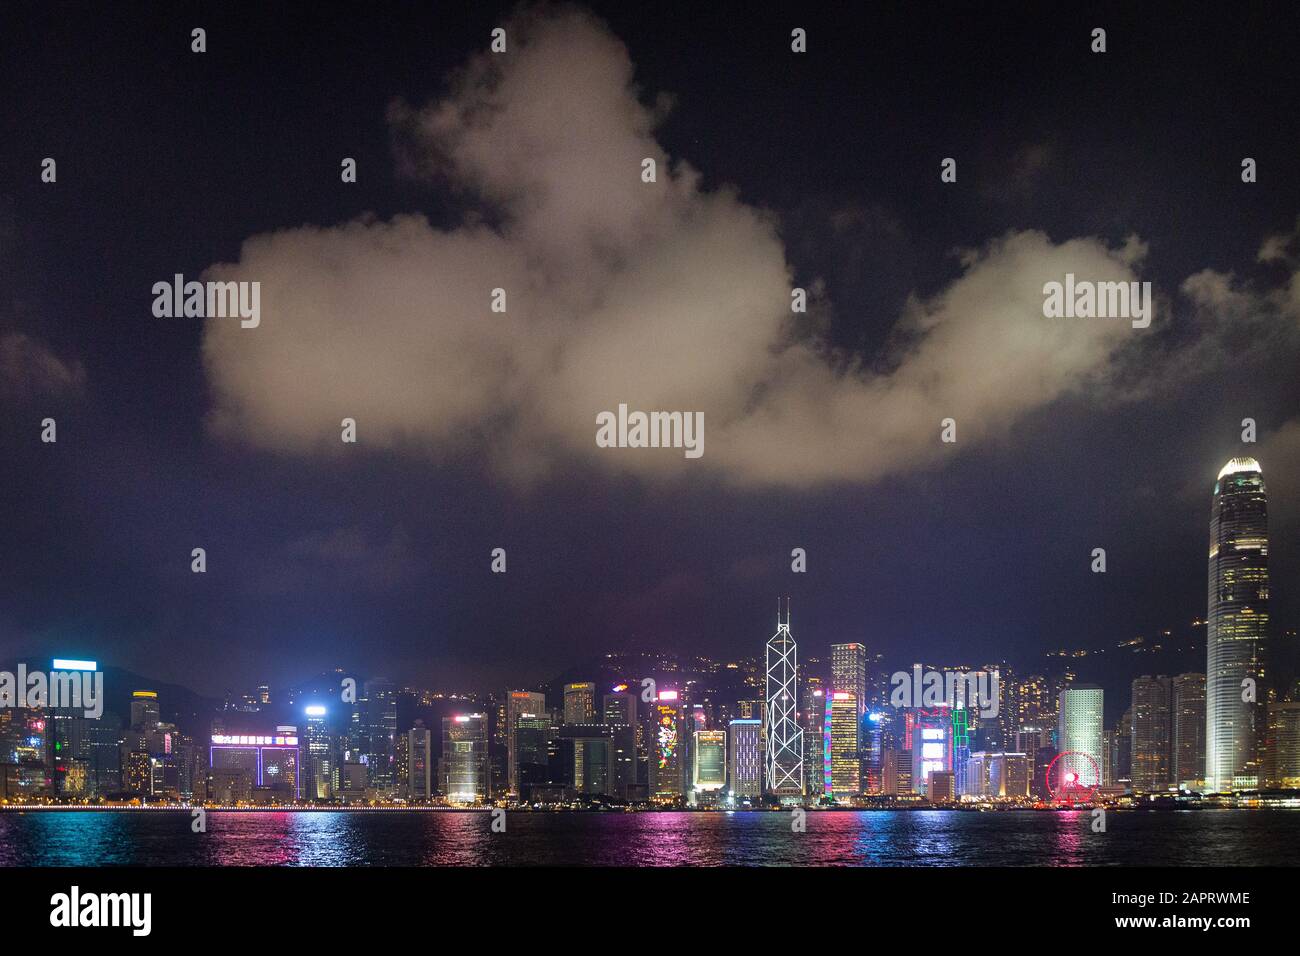 Hong Kong Skyline at night, looking from Kowloon across Hong Kong harbour to the skyscrapers on Hong Kong Island, Hong Kong Asia Stock Photo